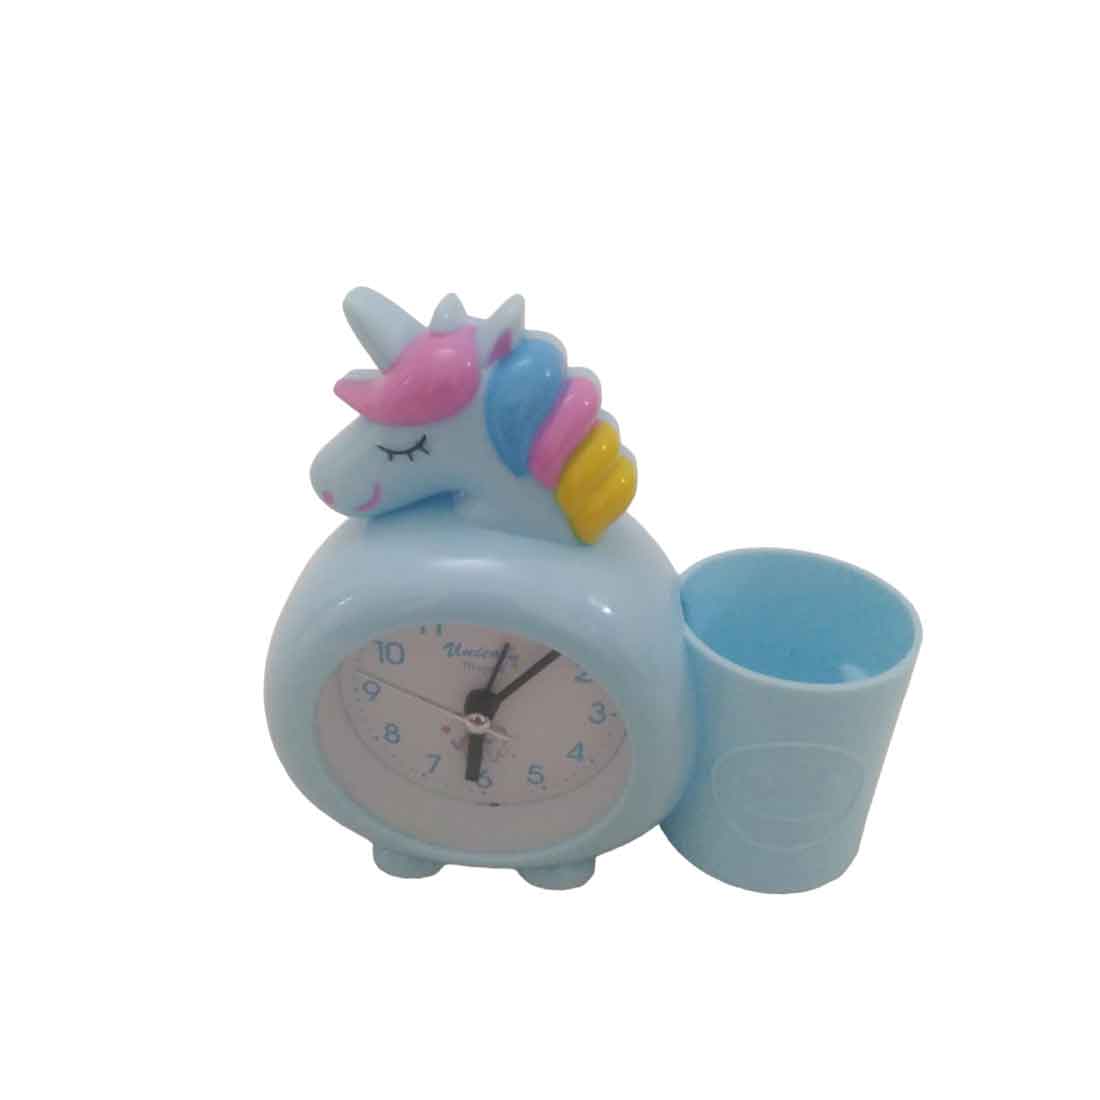 Kids Alarm Clock with Pen Pencil Stand | Unicorn Design Table Alarm Clock - For Kids Room Decor & Birthday Gift - Apkamart 